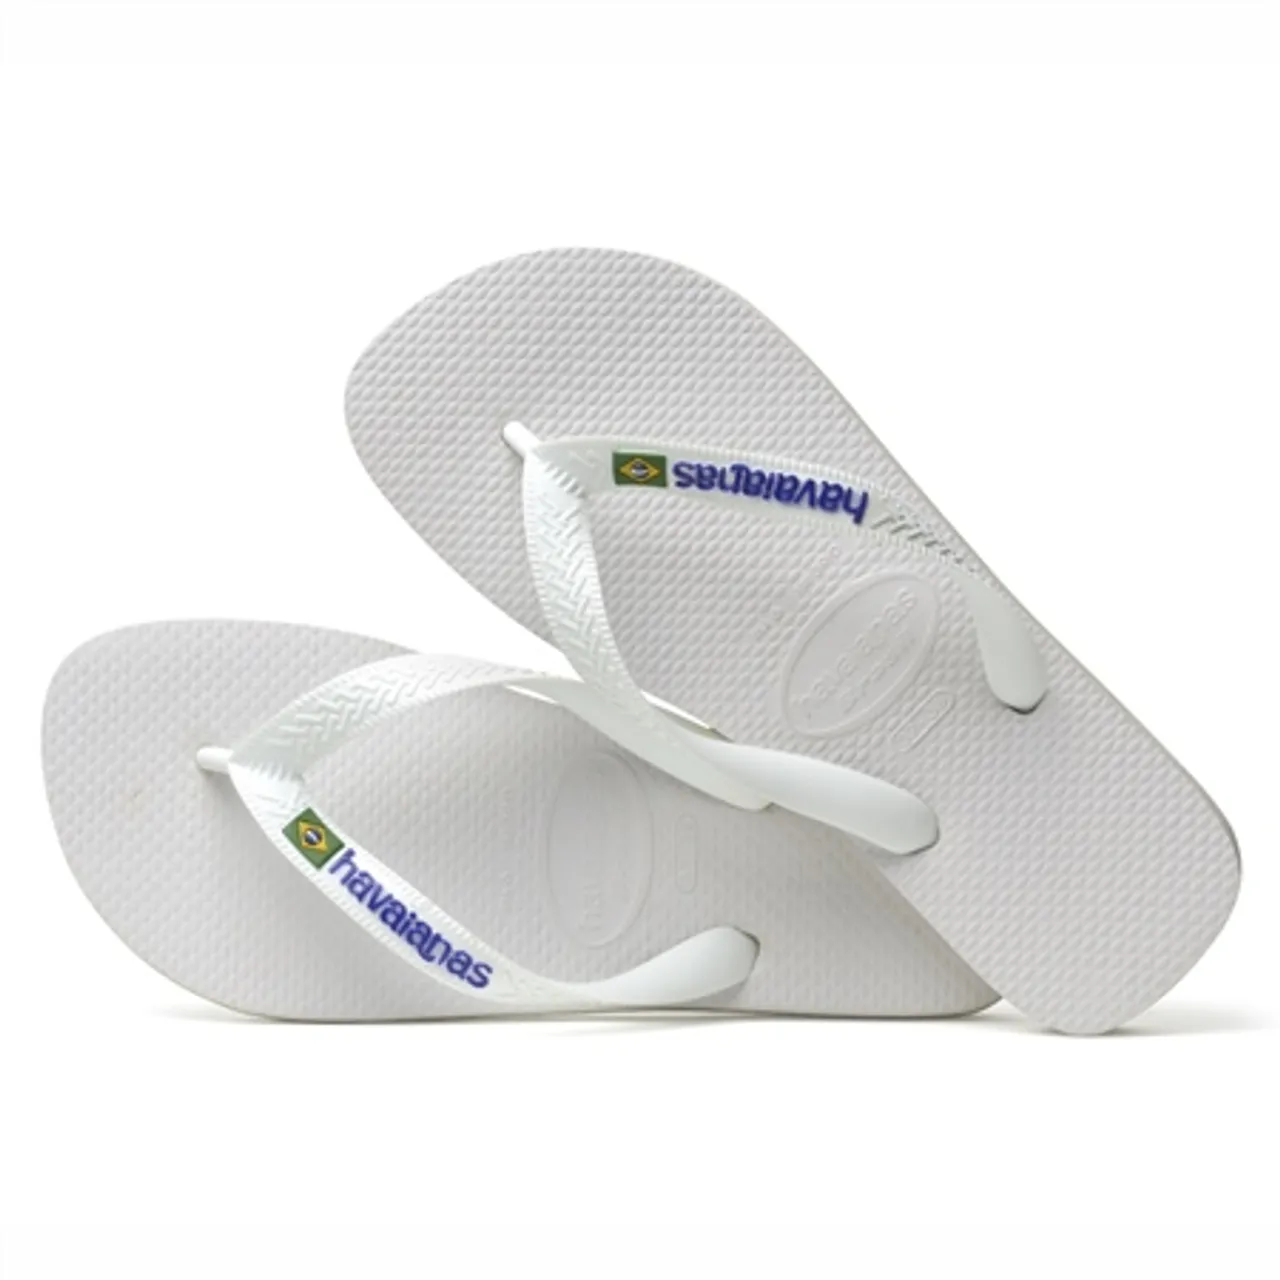 Havaianas Brazil Logo Flip Flops - White - UK 6-7 (EU 39/40)